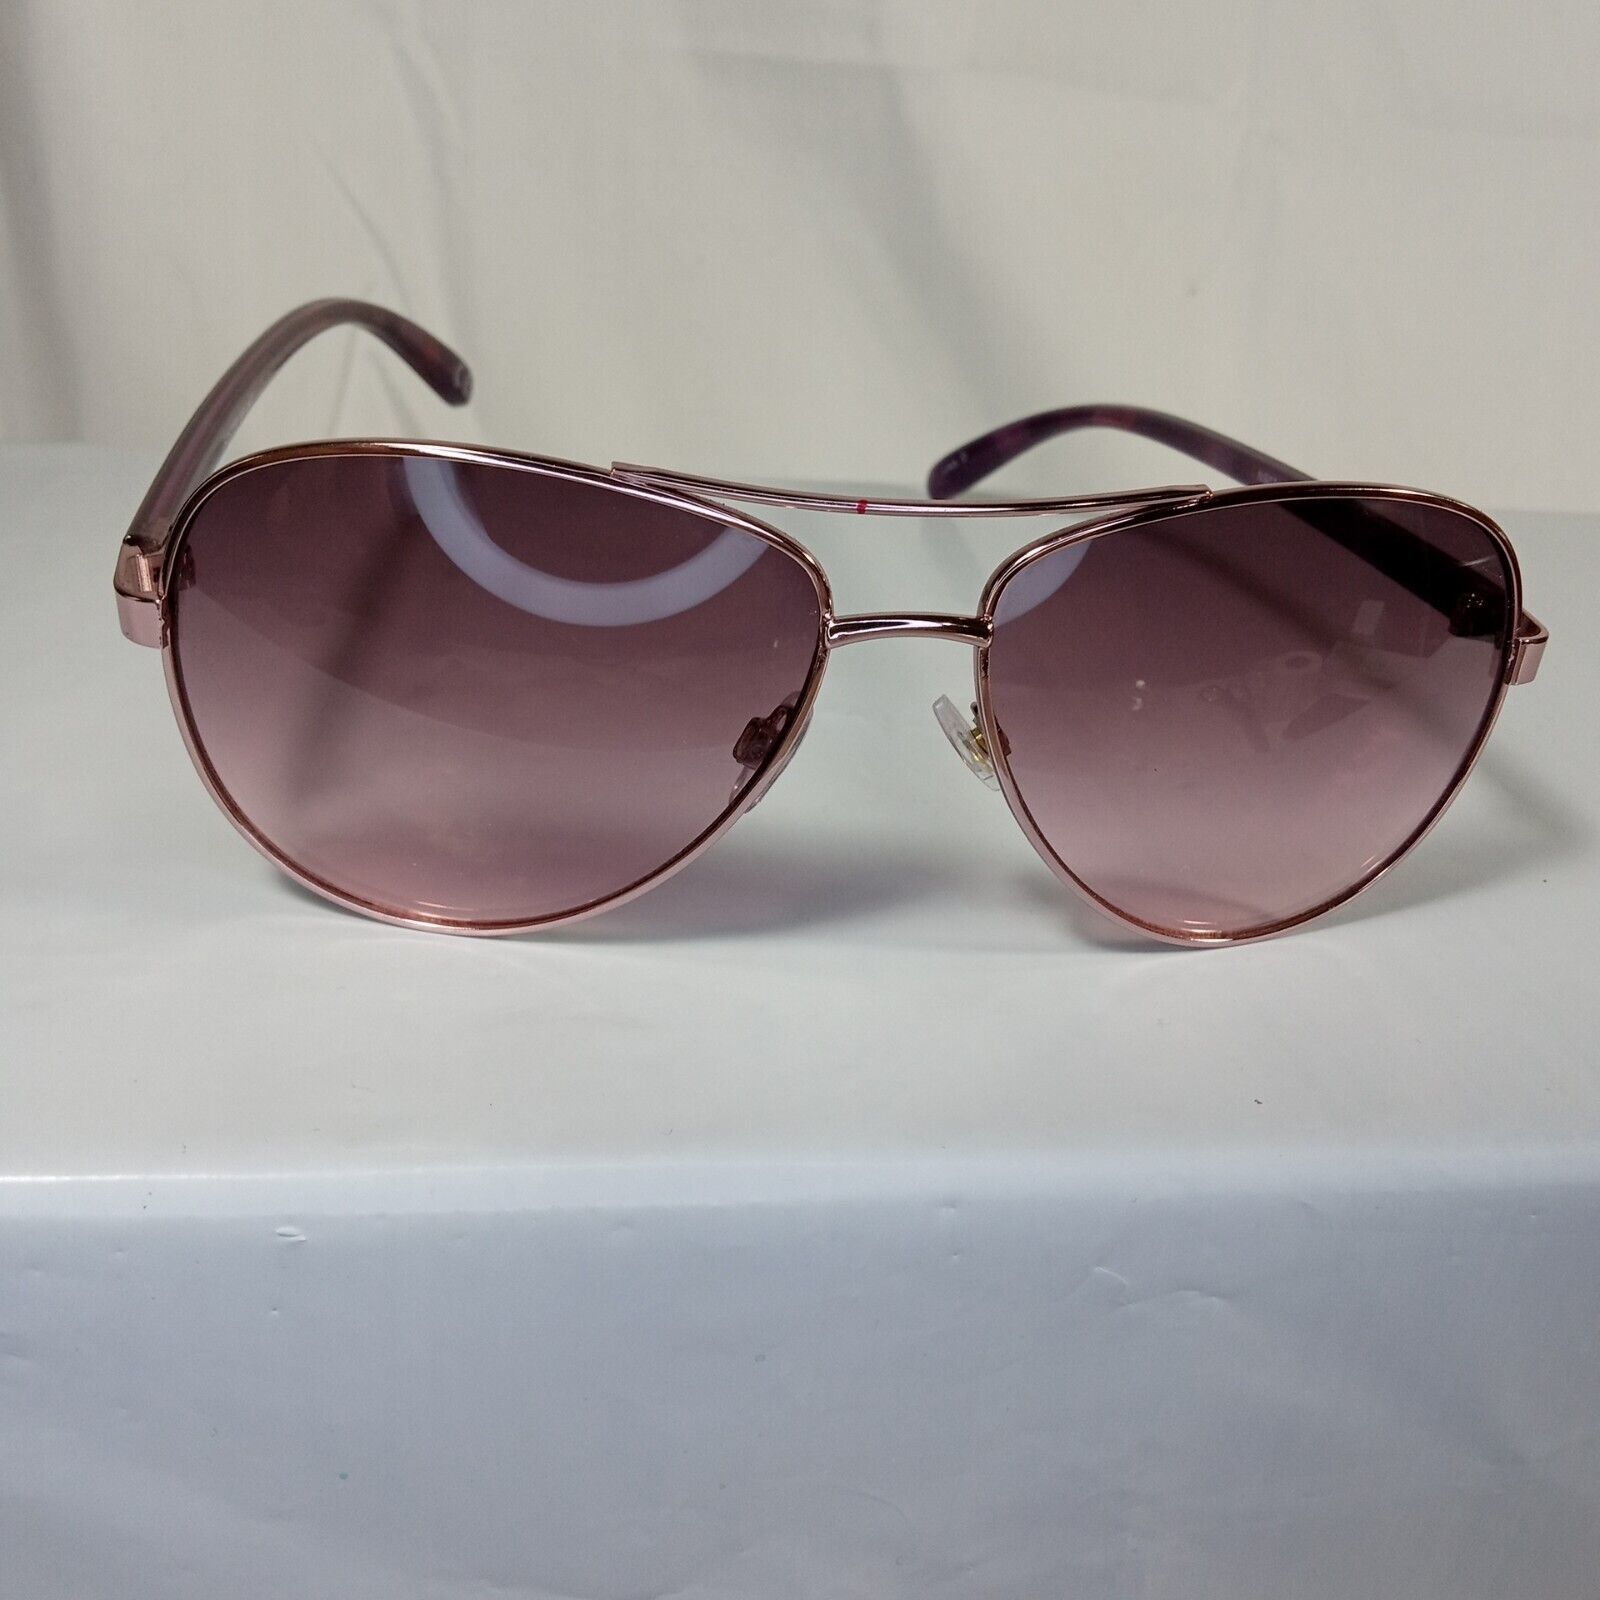 Primary image for Foster Grant MAXBLOCK Janette Purple Tortoise Aviators Womens Sunglasses 100%UVA